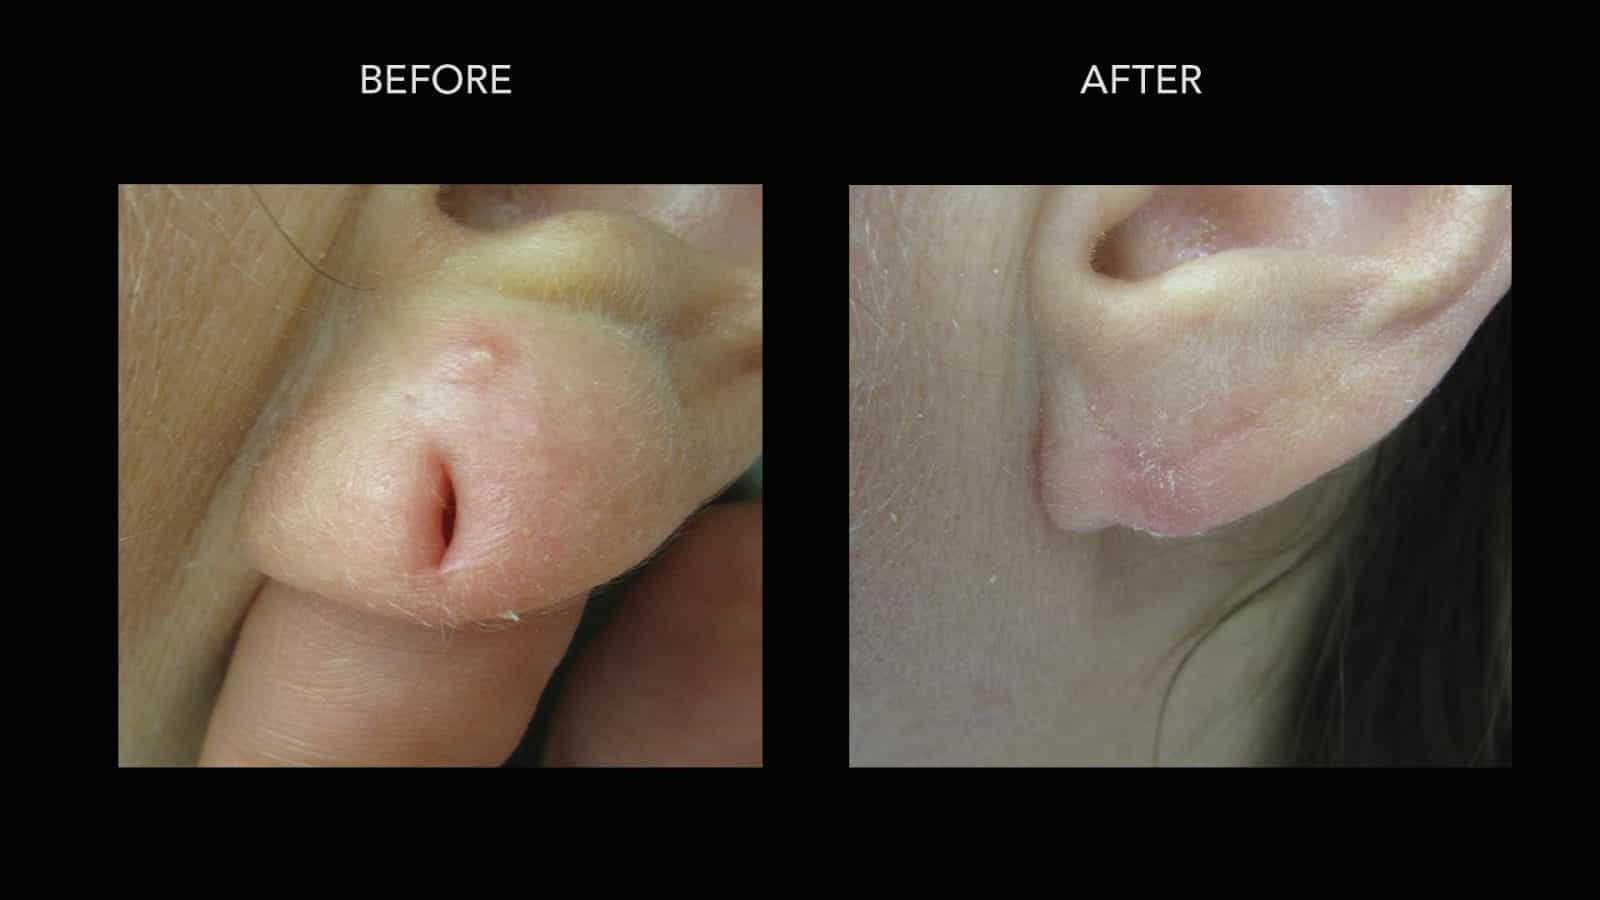 Ear Lobe Repair Before and After Photos DermMedica